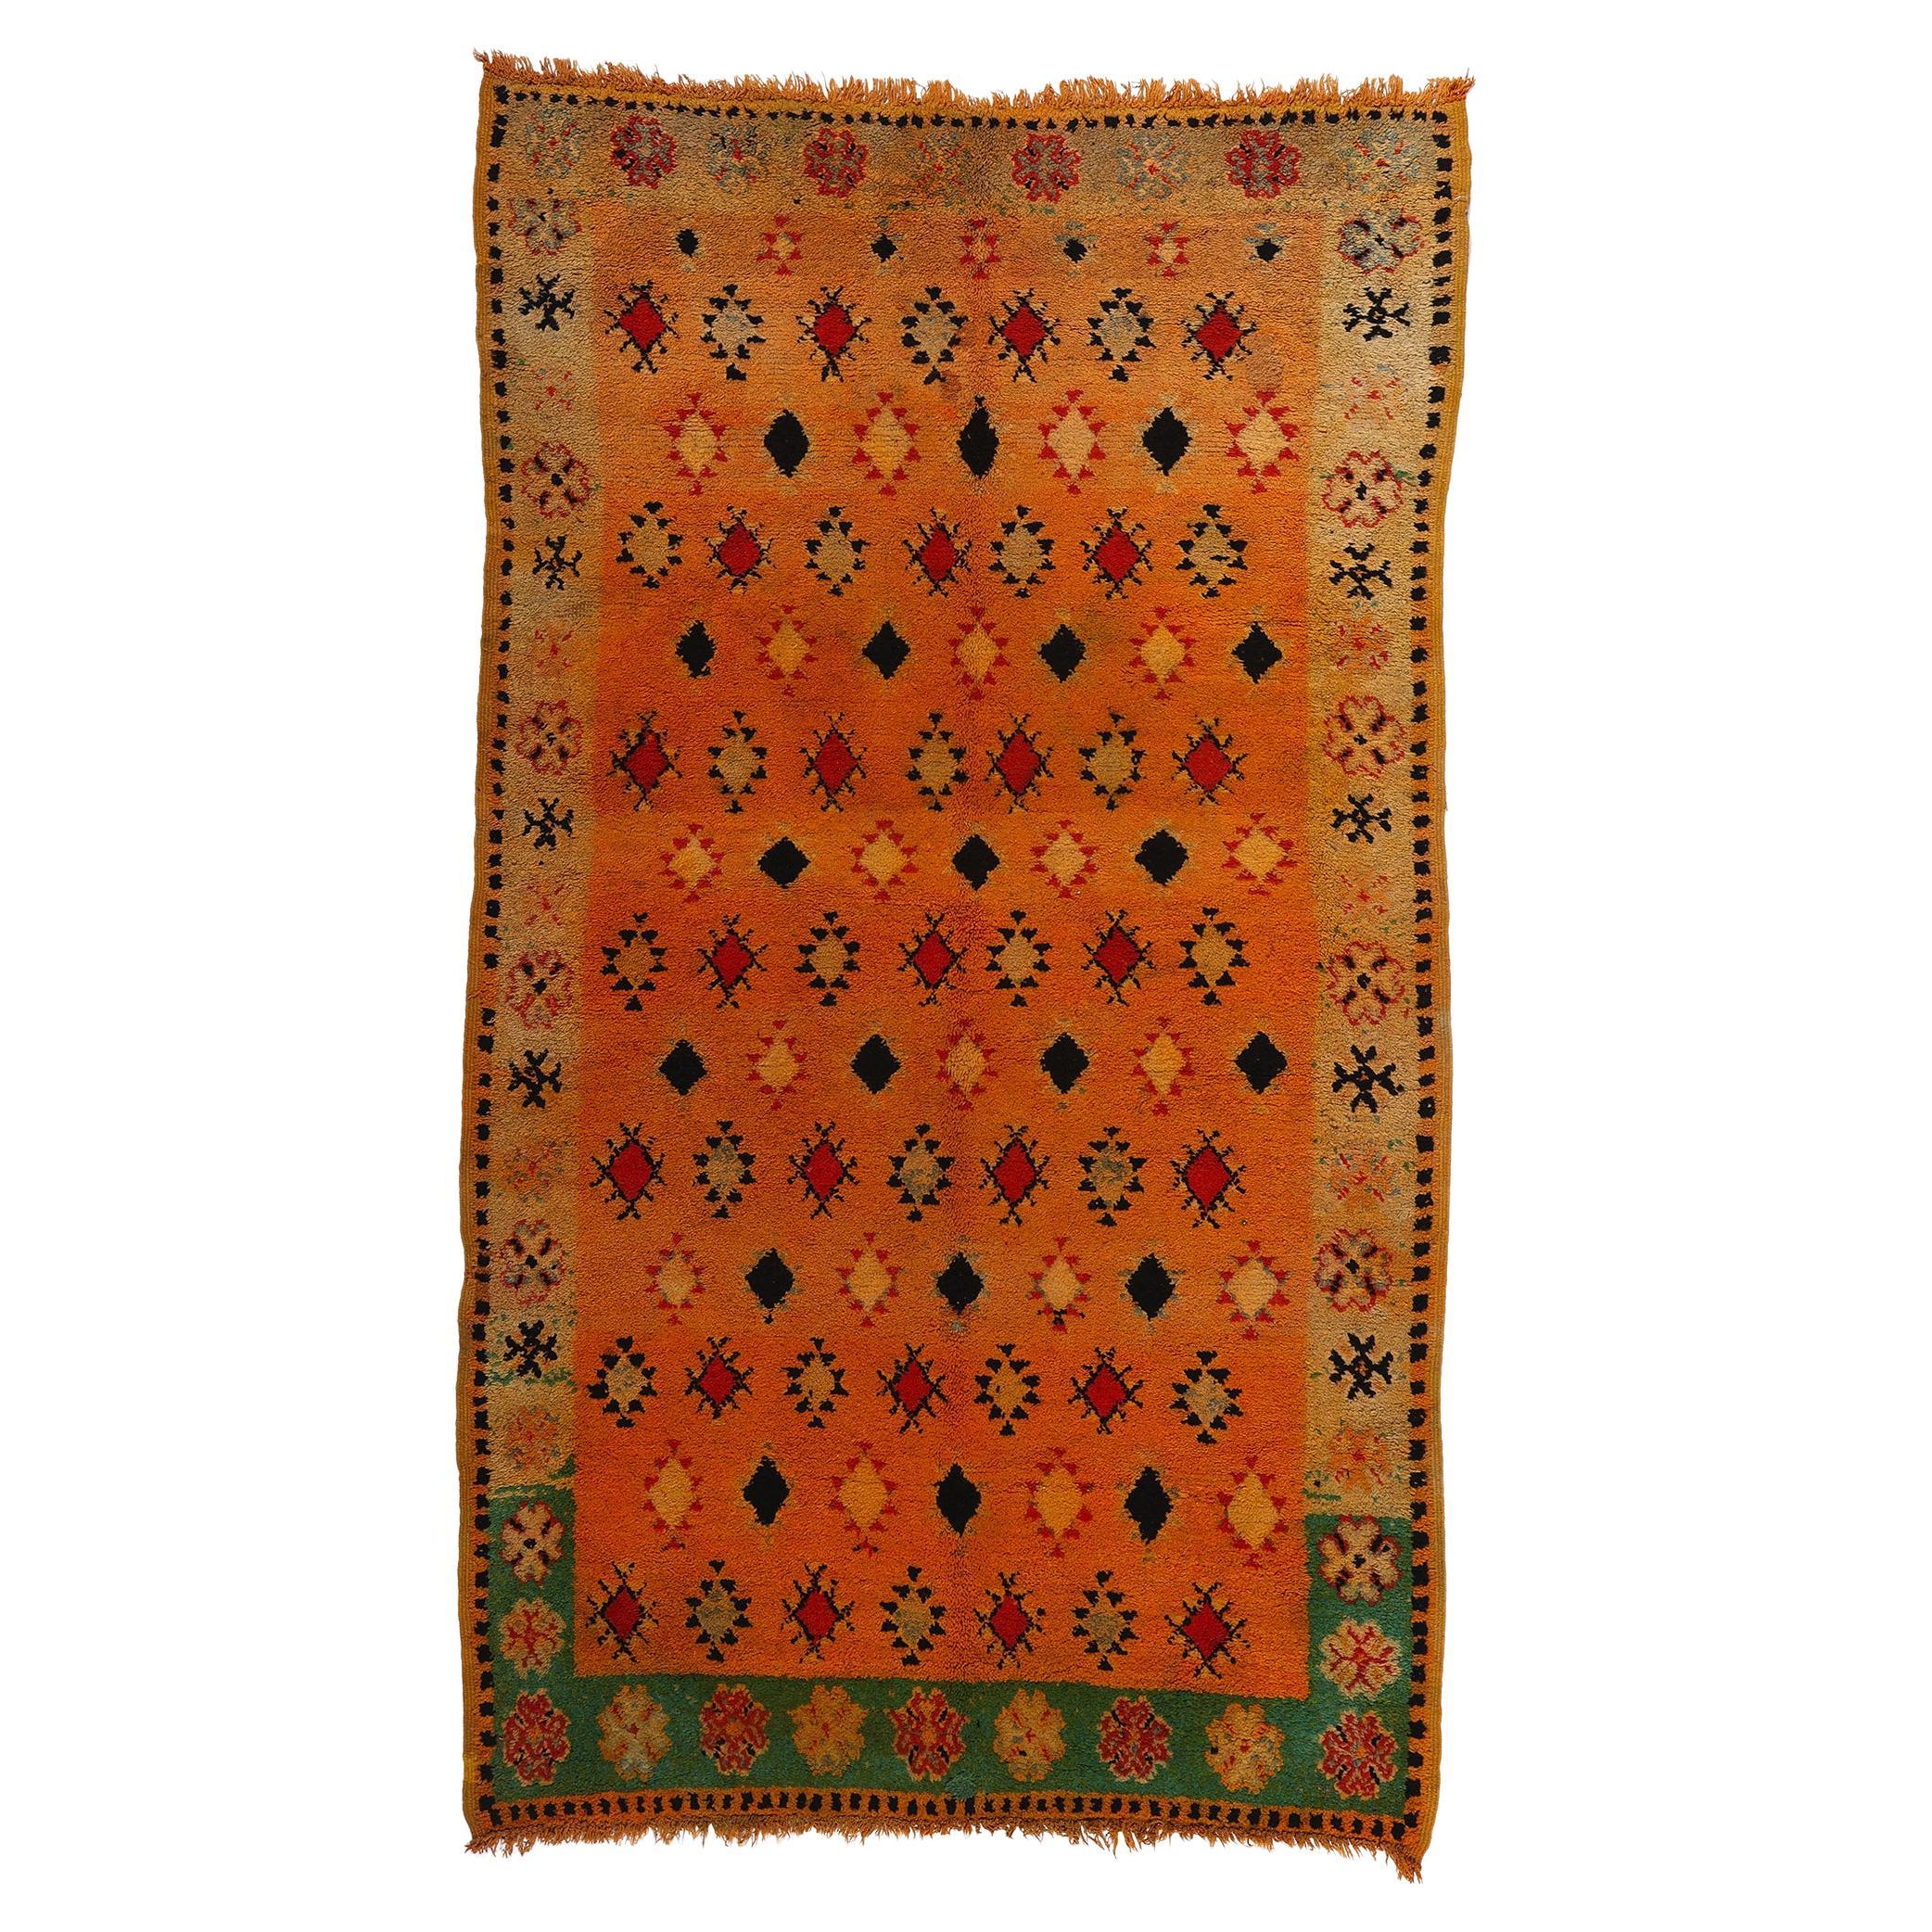 Vintage Boujad Moroccan Rug, Tribal Enchantment Meets Global Boho Chic